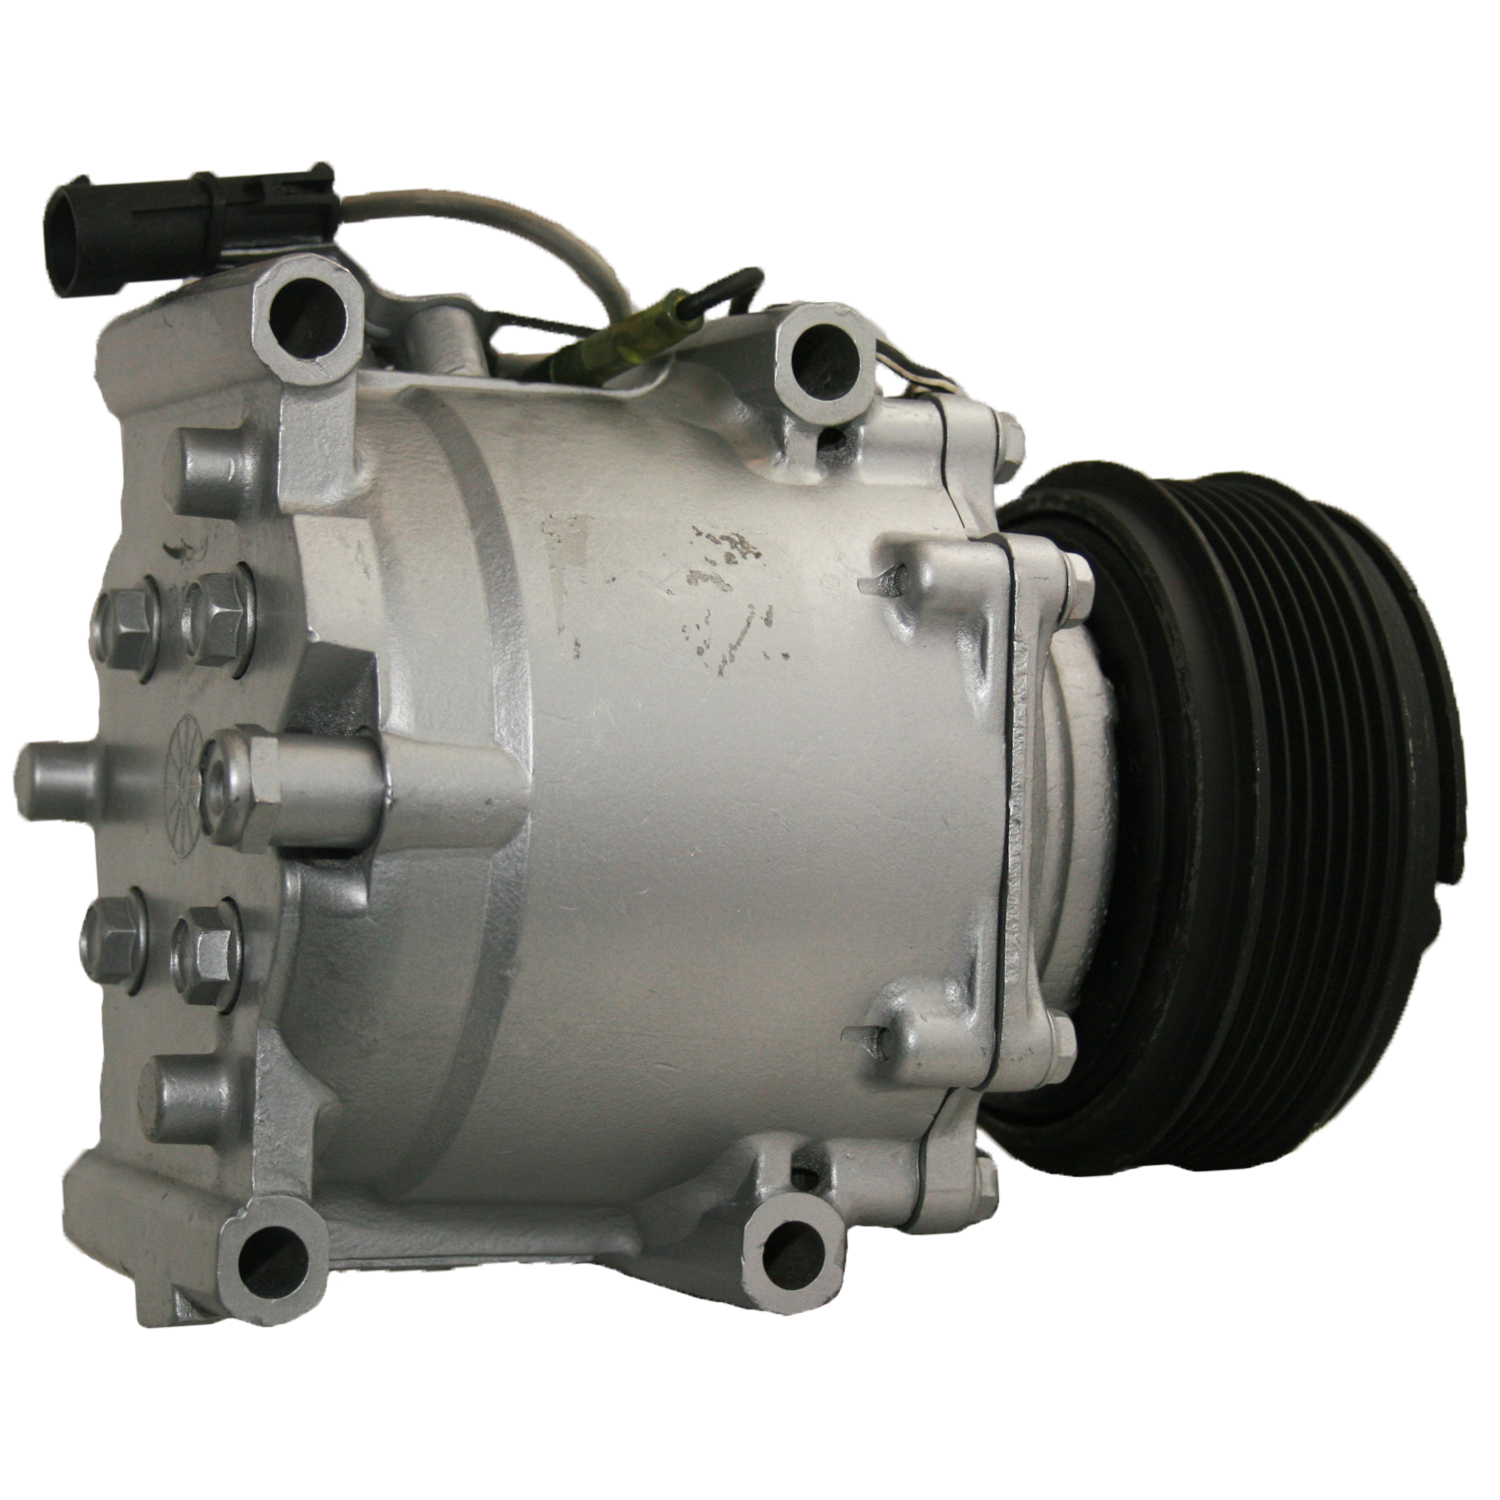 TCW Compressor 40861.601 Remanufactured Product Image field_60b6a13a6e67c